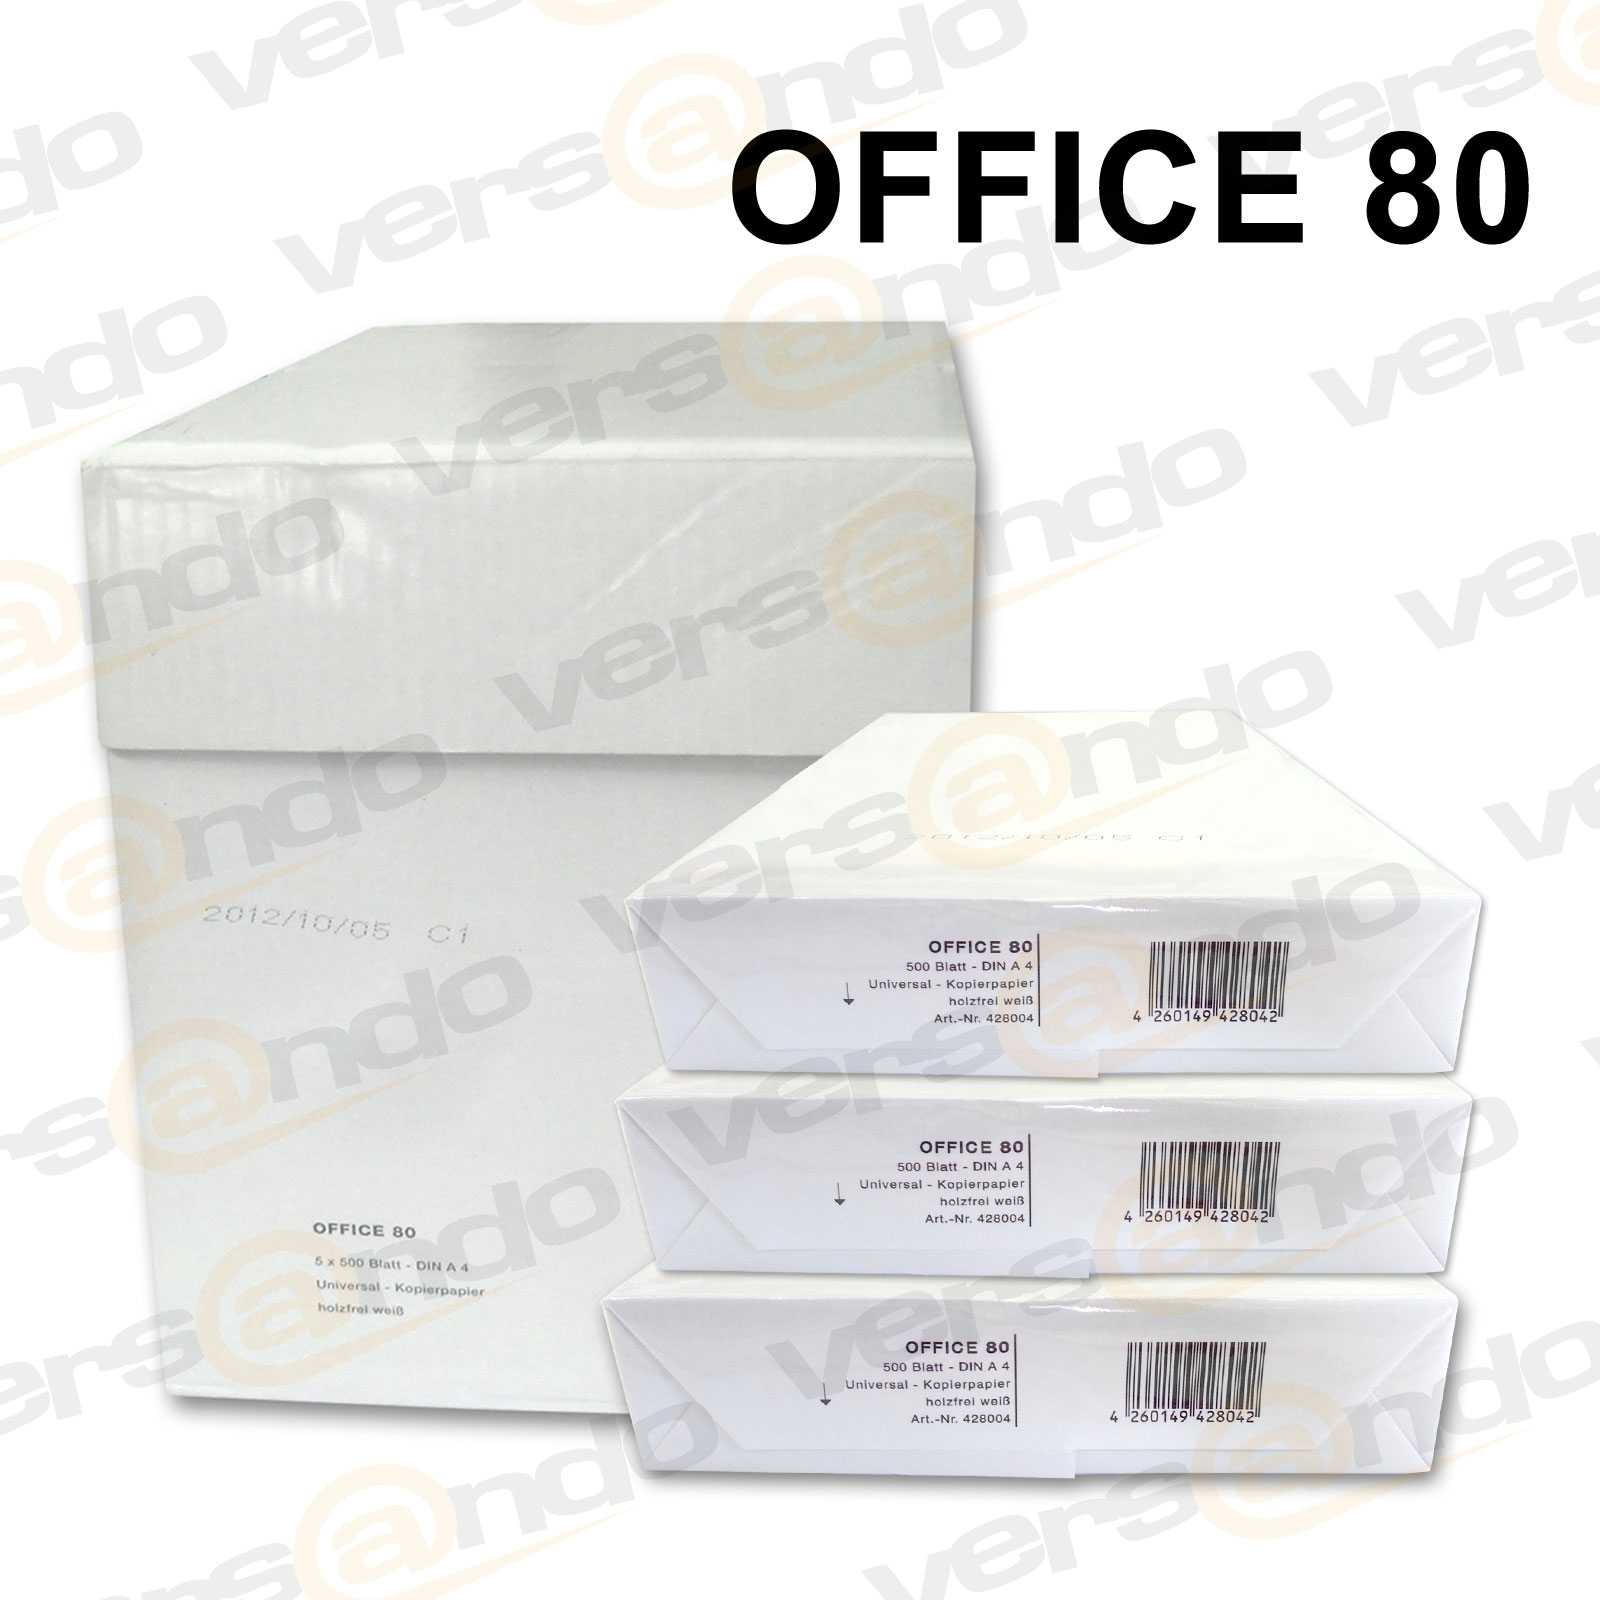 Office 80 Kopierpapier